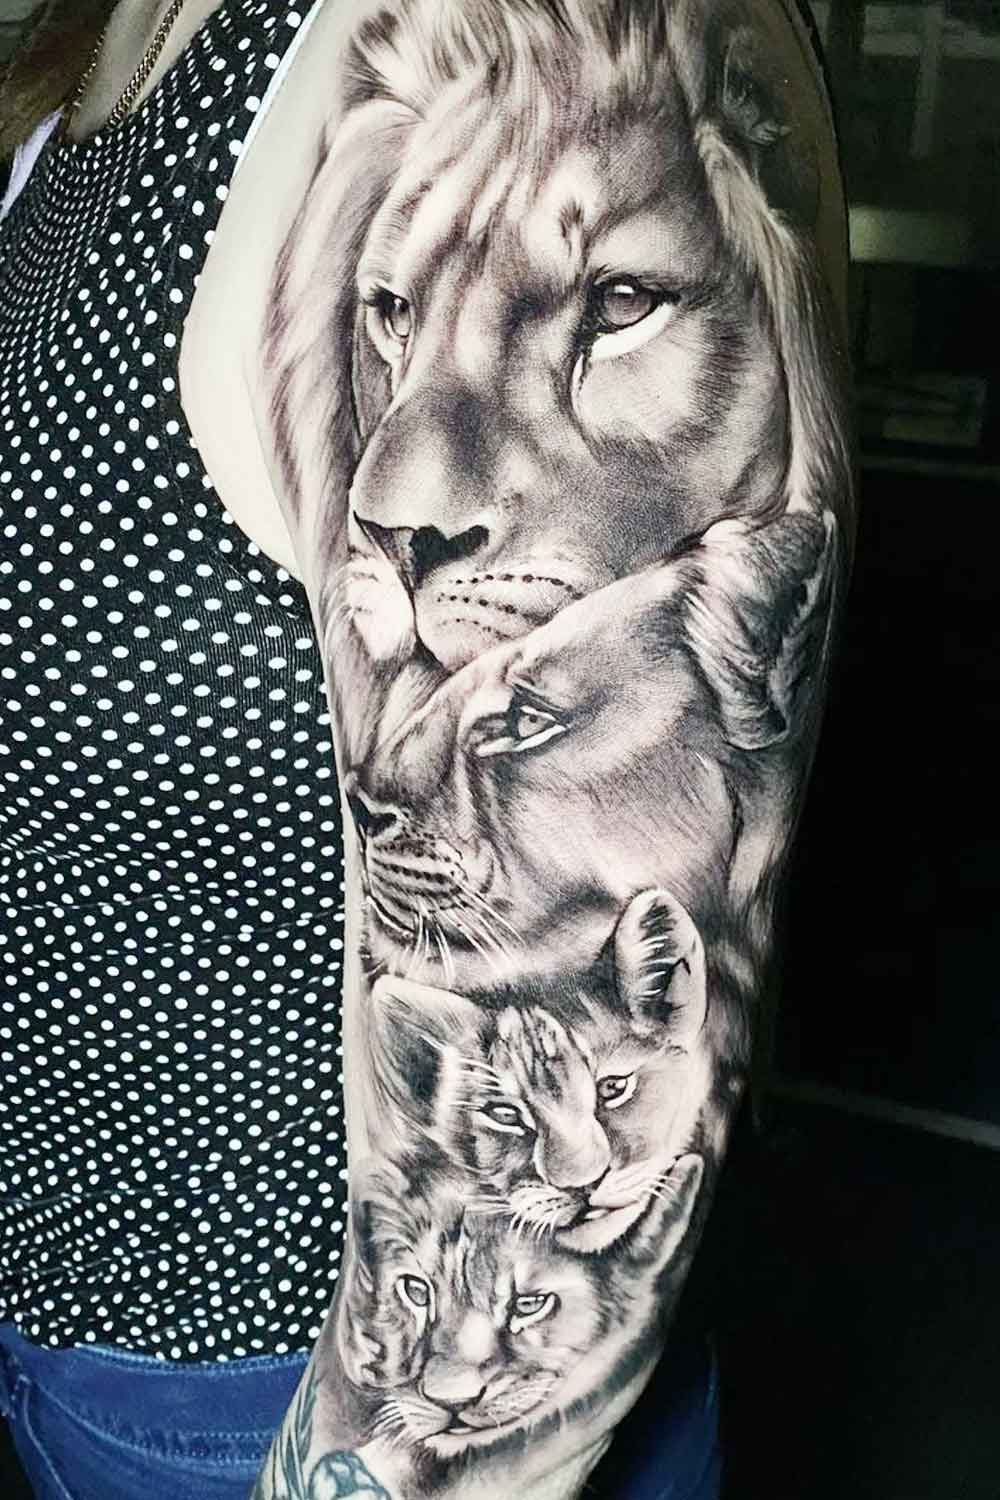 Lion Family Tattoo Sleeve